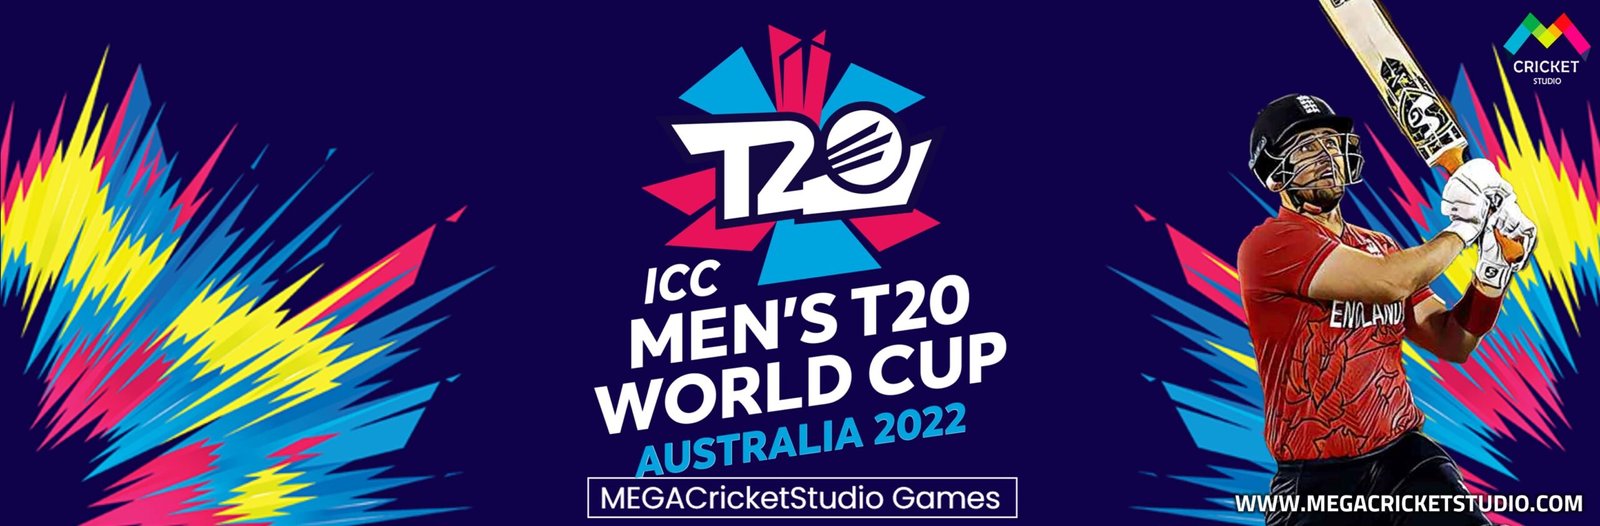 icc-t20-world-cup-2022-patch-for-ea-cricket-07-megacricketstudio-min